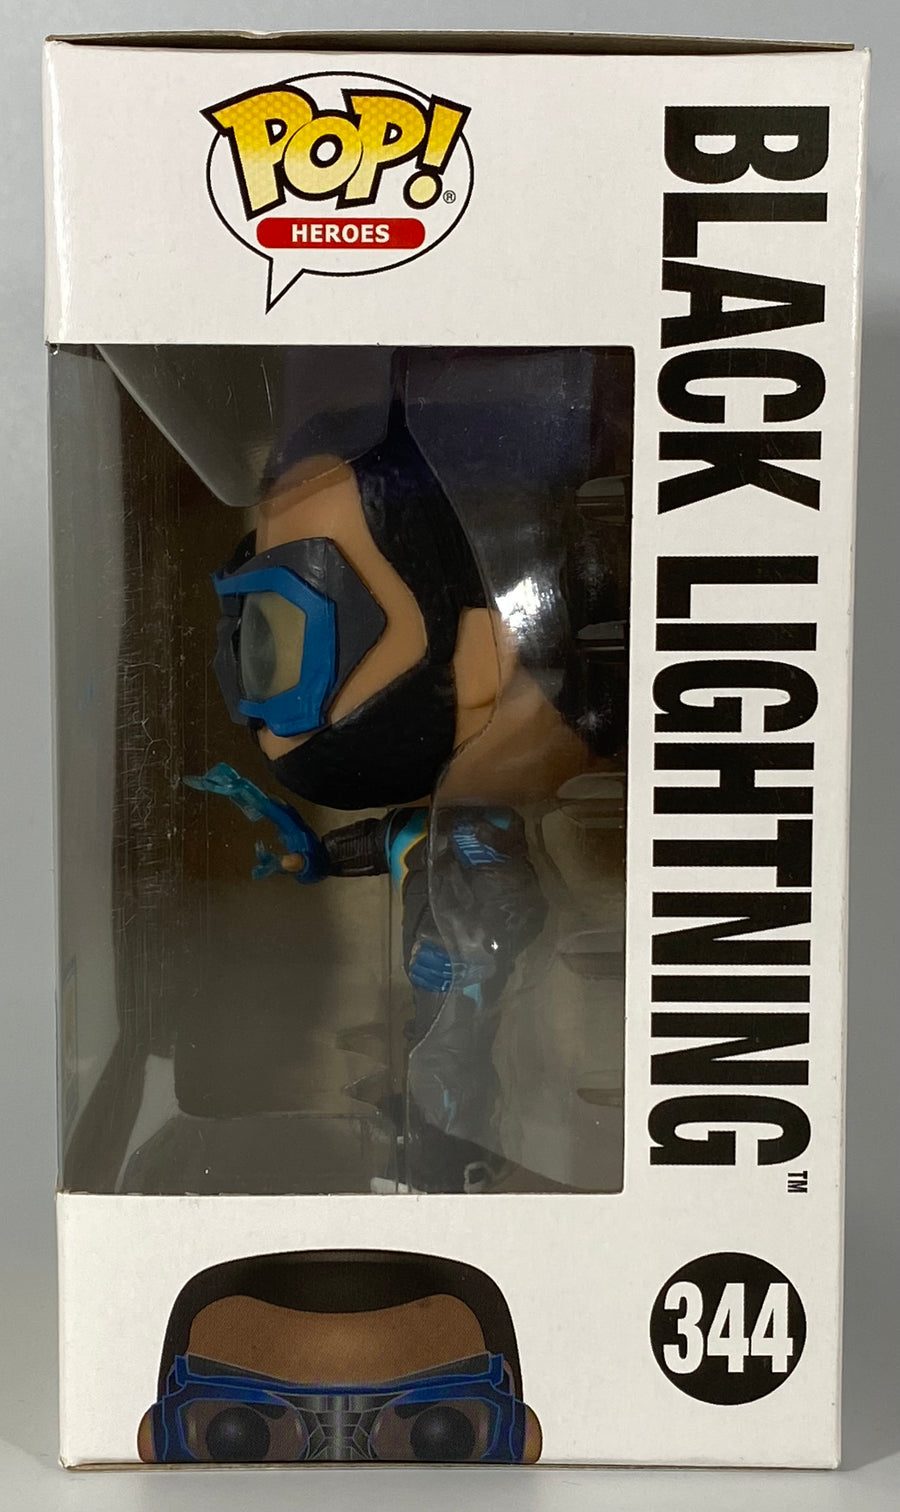 DC #344 Black Lightning - SDCC Exclusive 3000pcs Funko Pop